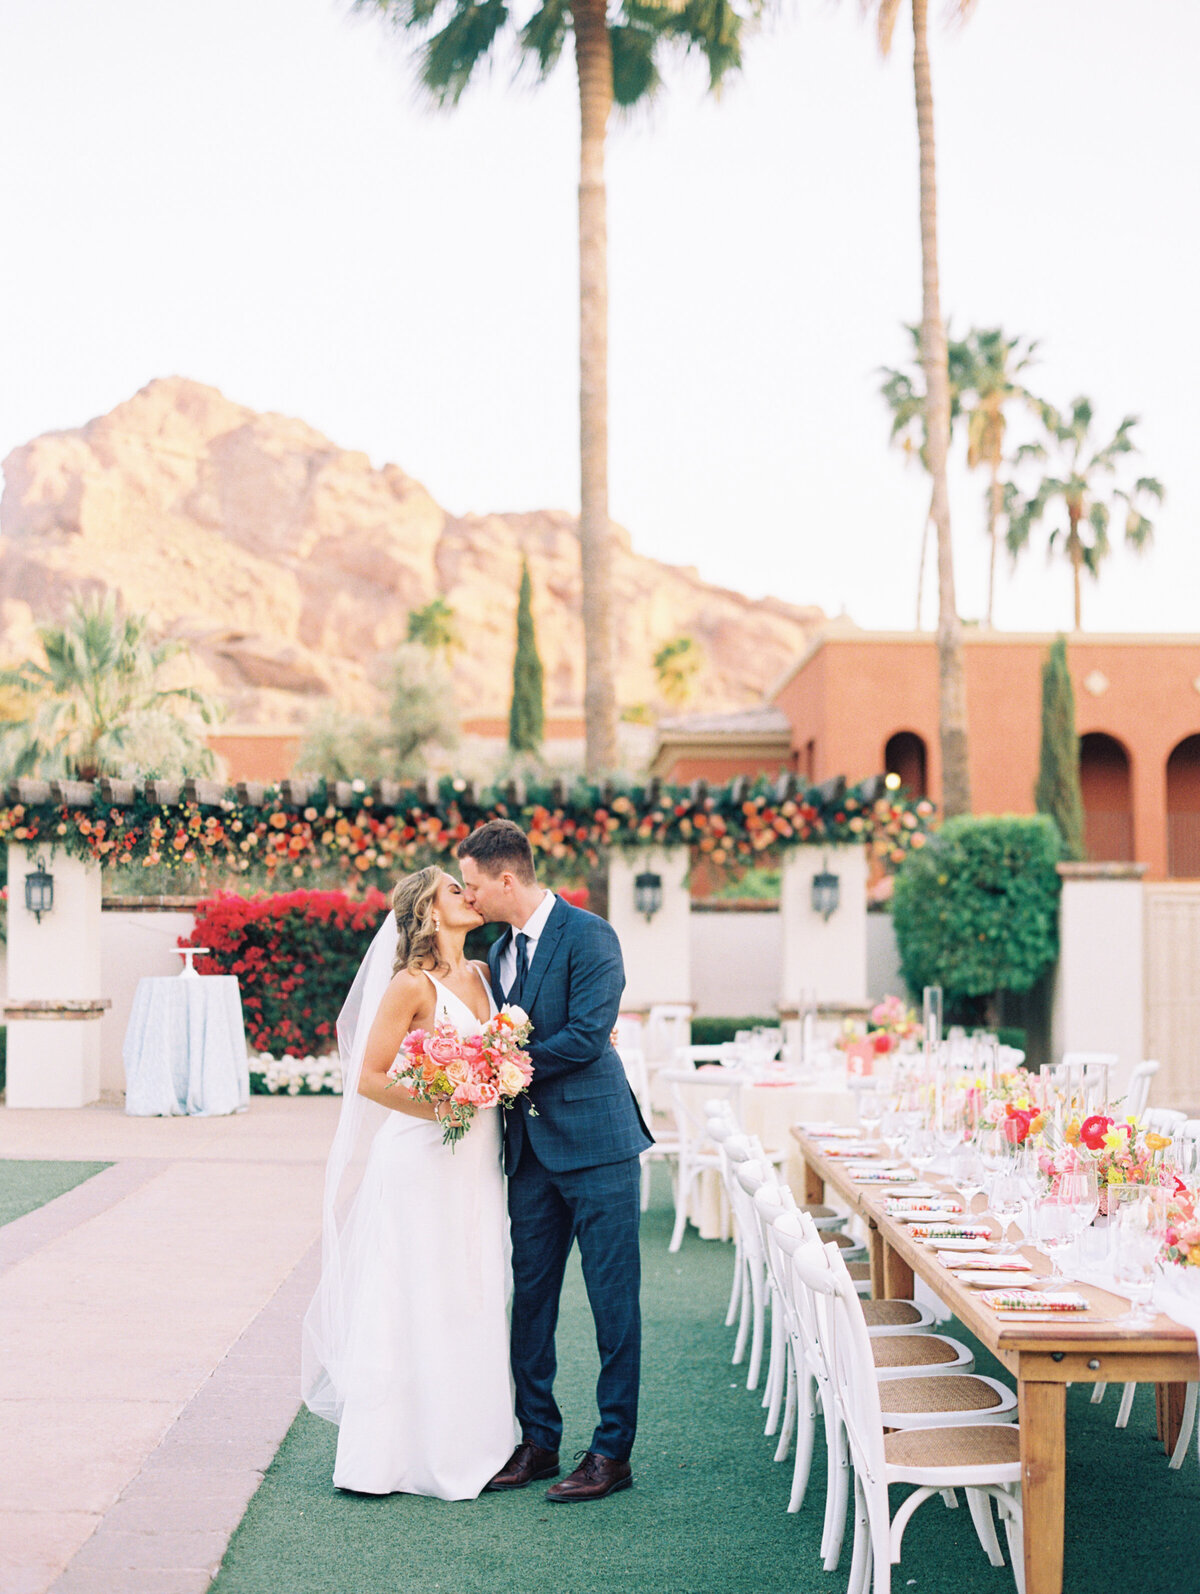 Rachael & Cameron Testimonial | Mary Claire Photography | Arizona & Destination Fine Art Wedding Photographer